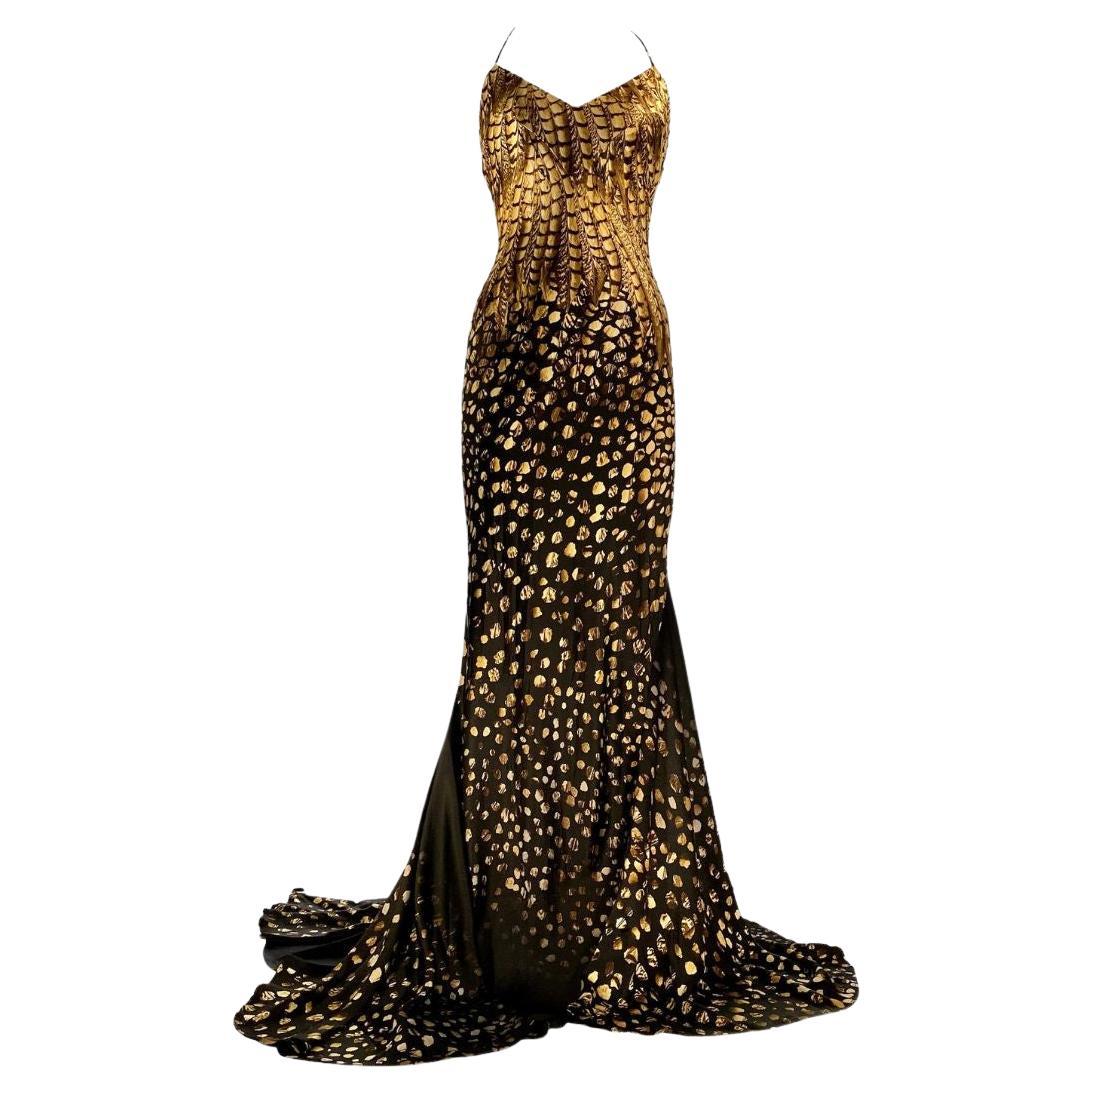 Discover more than 144 vintage designer gowns best